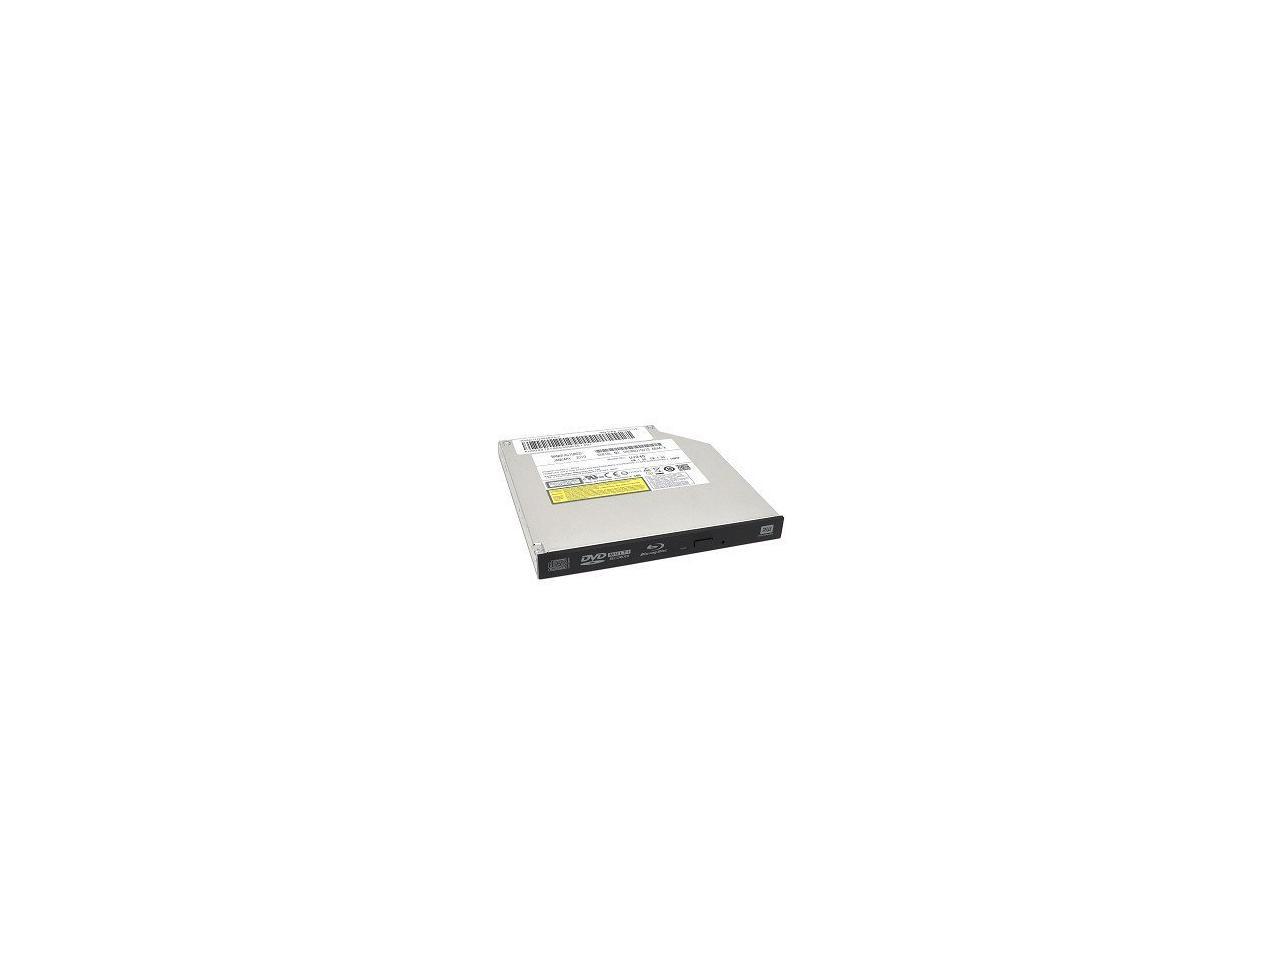 Panasonic UJ240 6x Blu-ray Burner BD-RE/8x DVD±RW DL SATA Drive (Black)